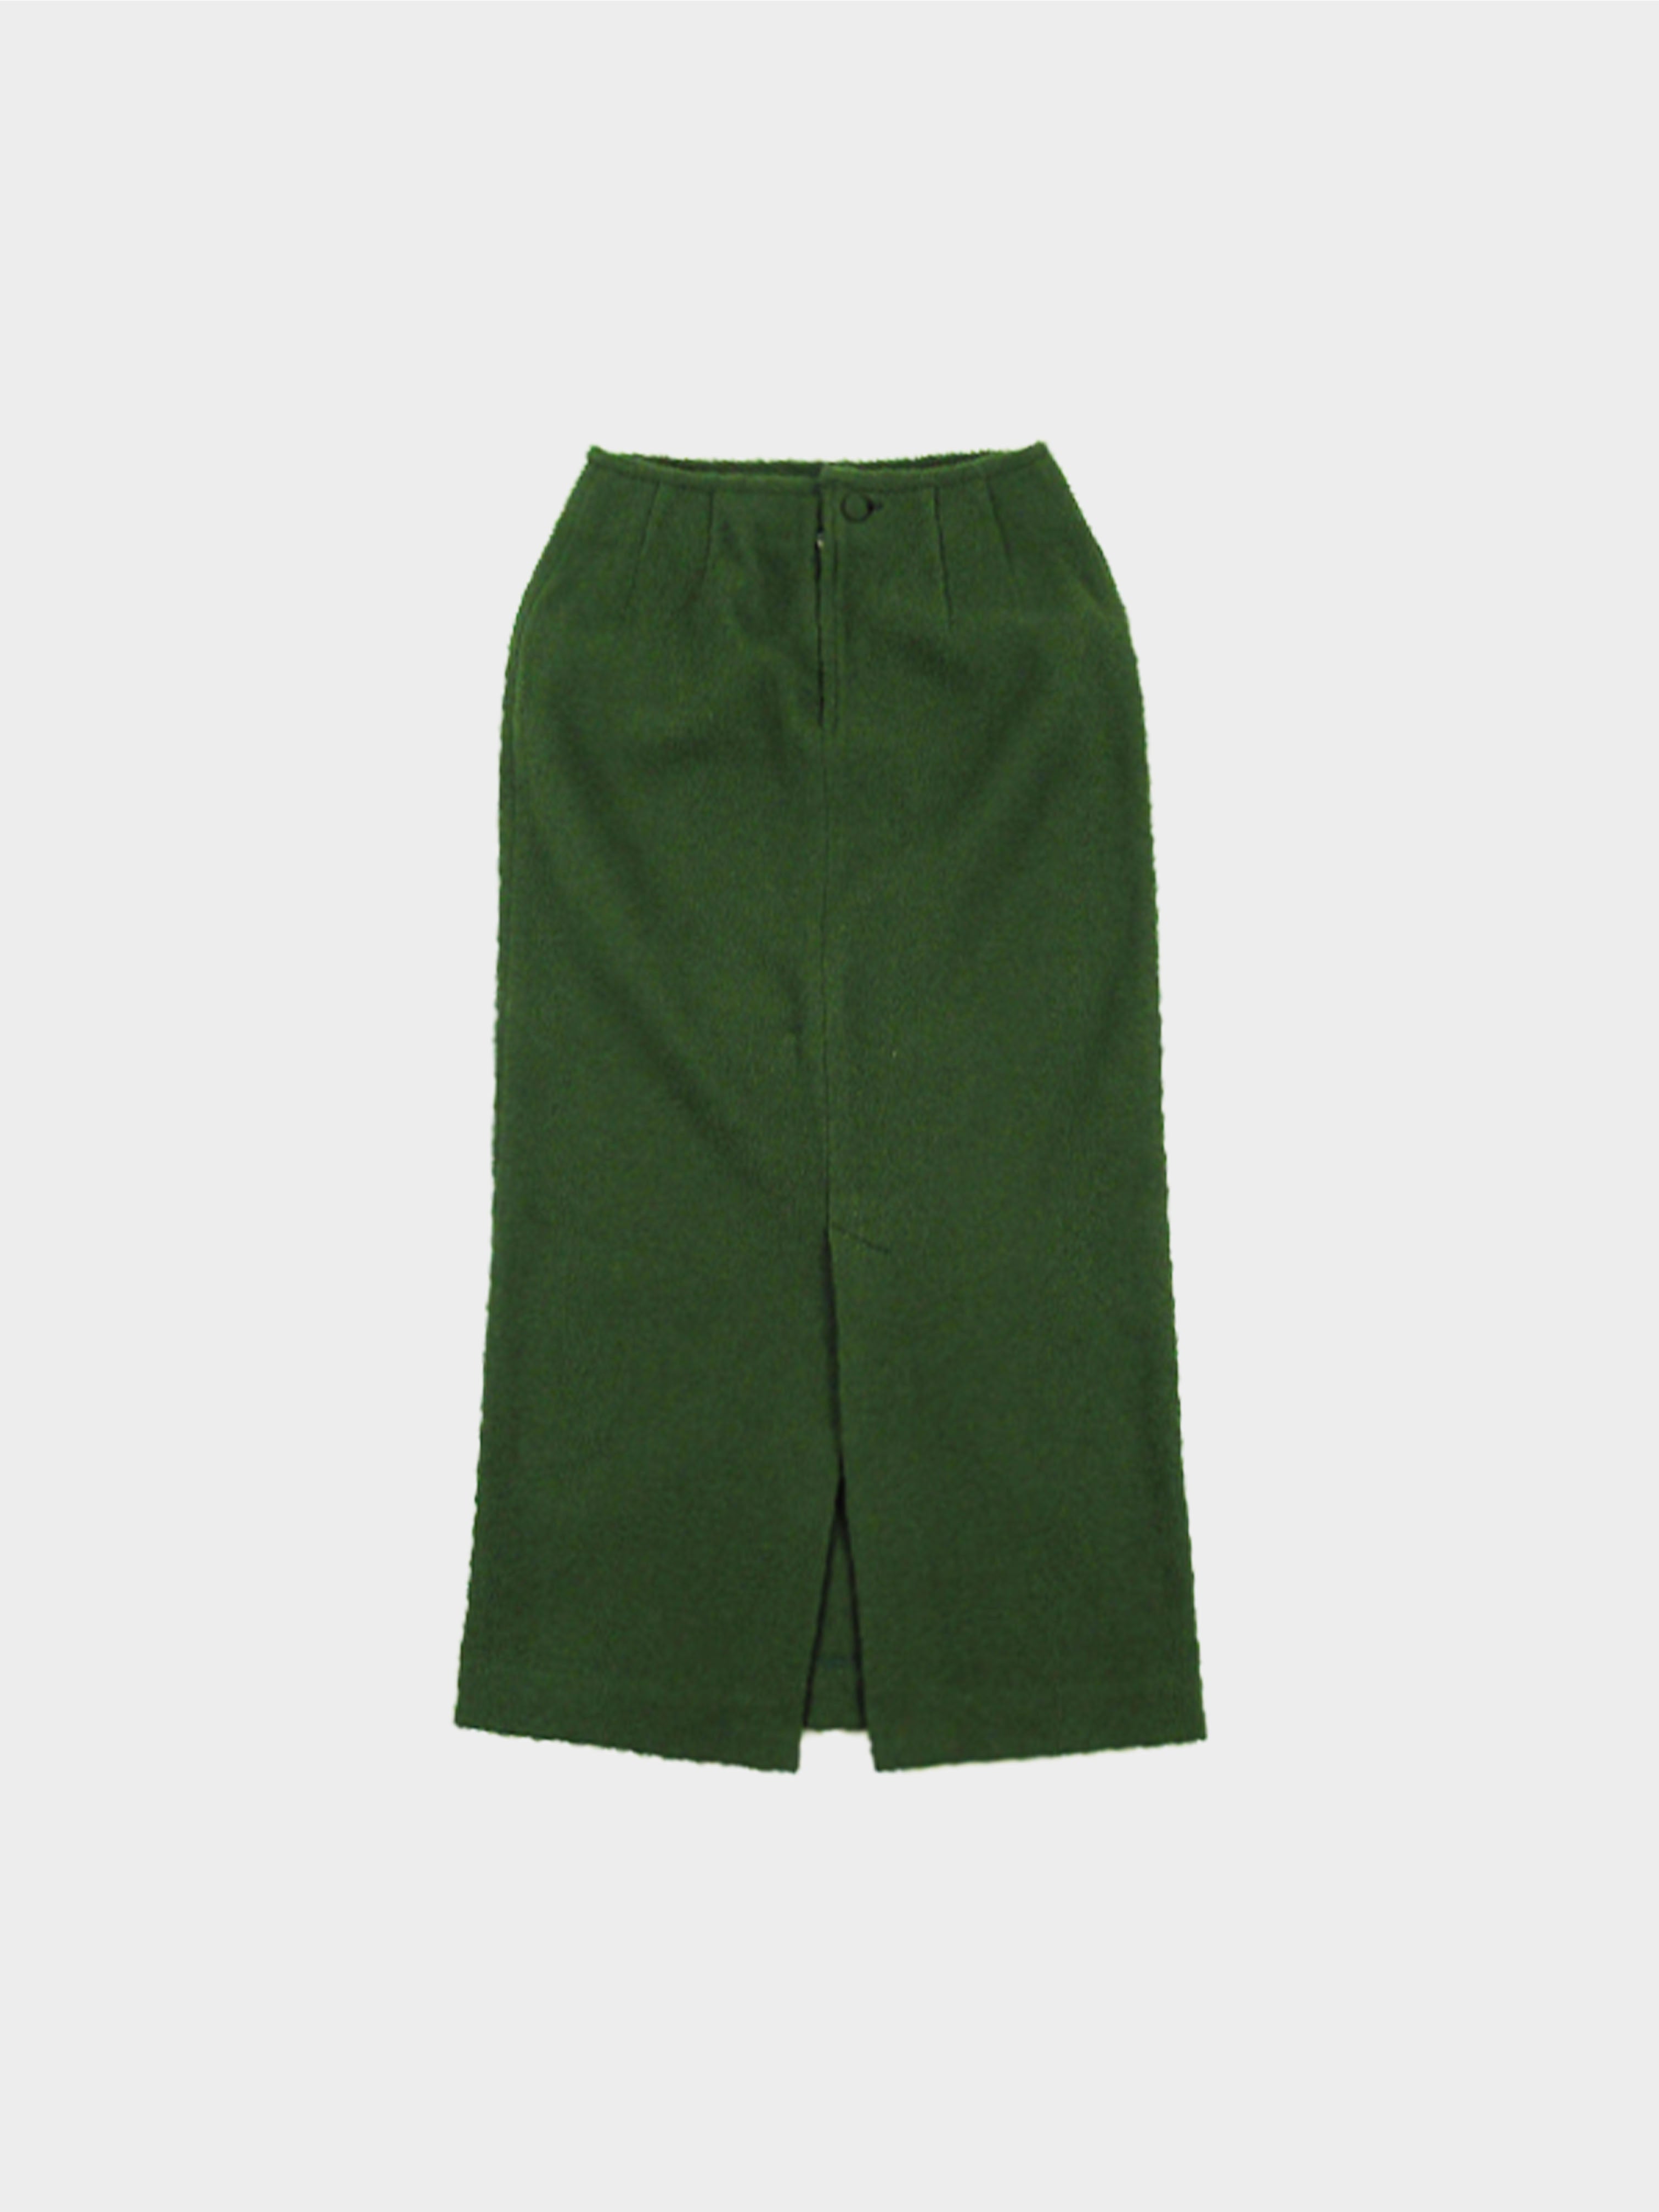 Jean Paul Gaultier 2000s Green Long Skirt